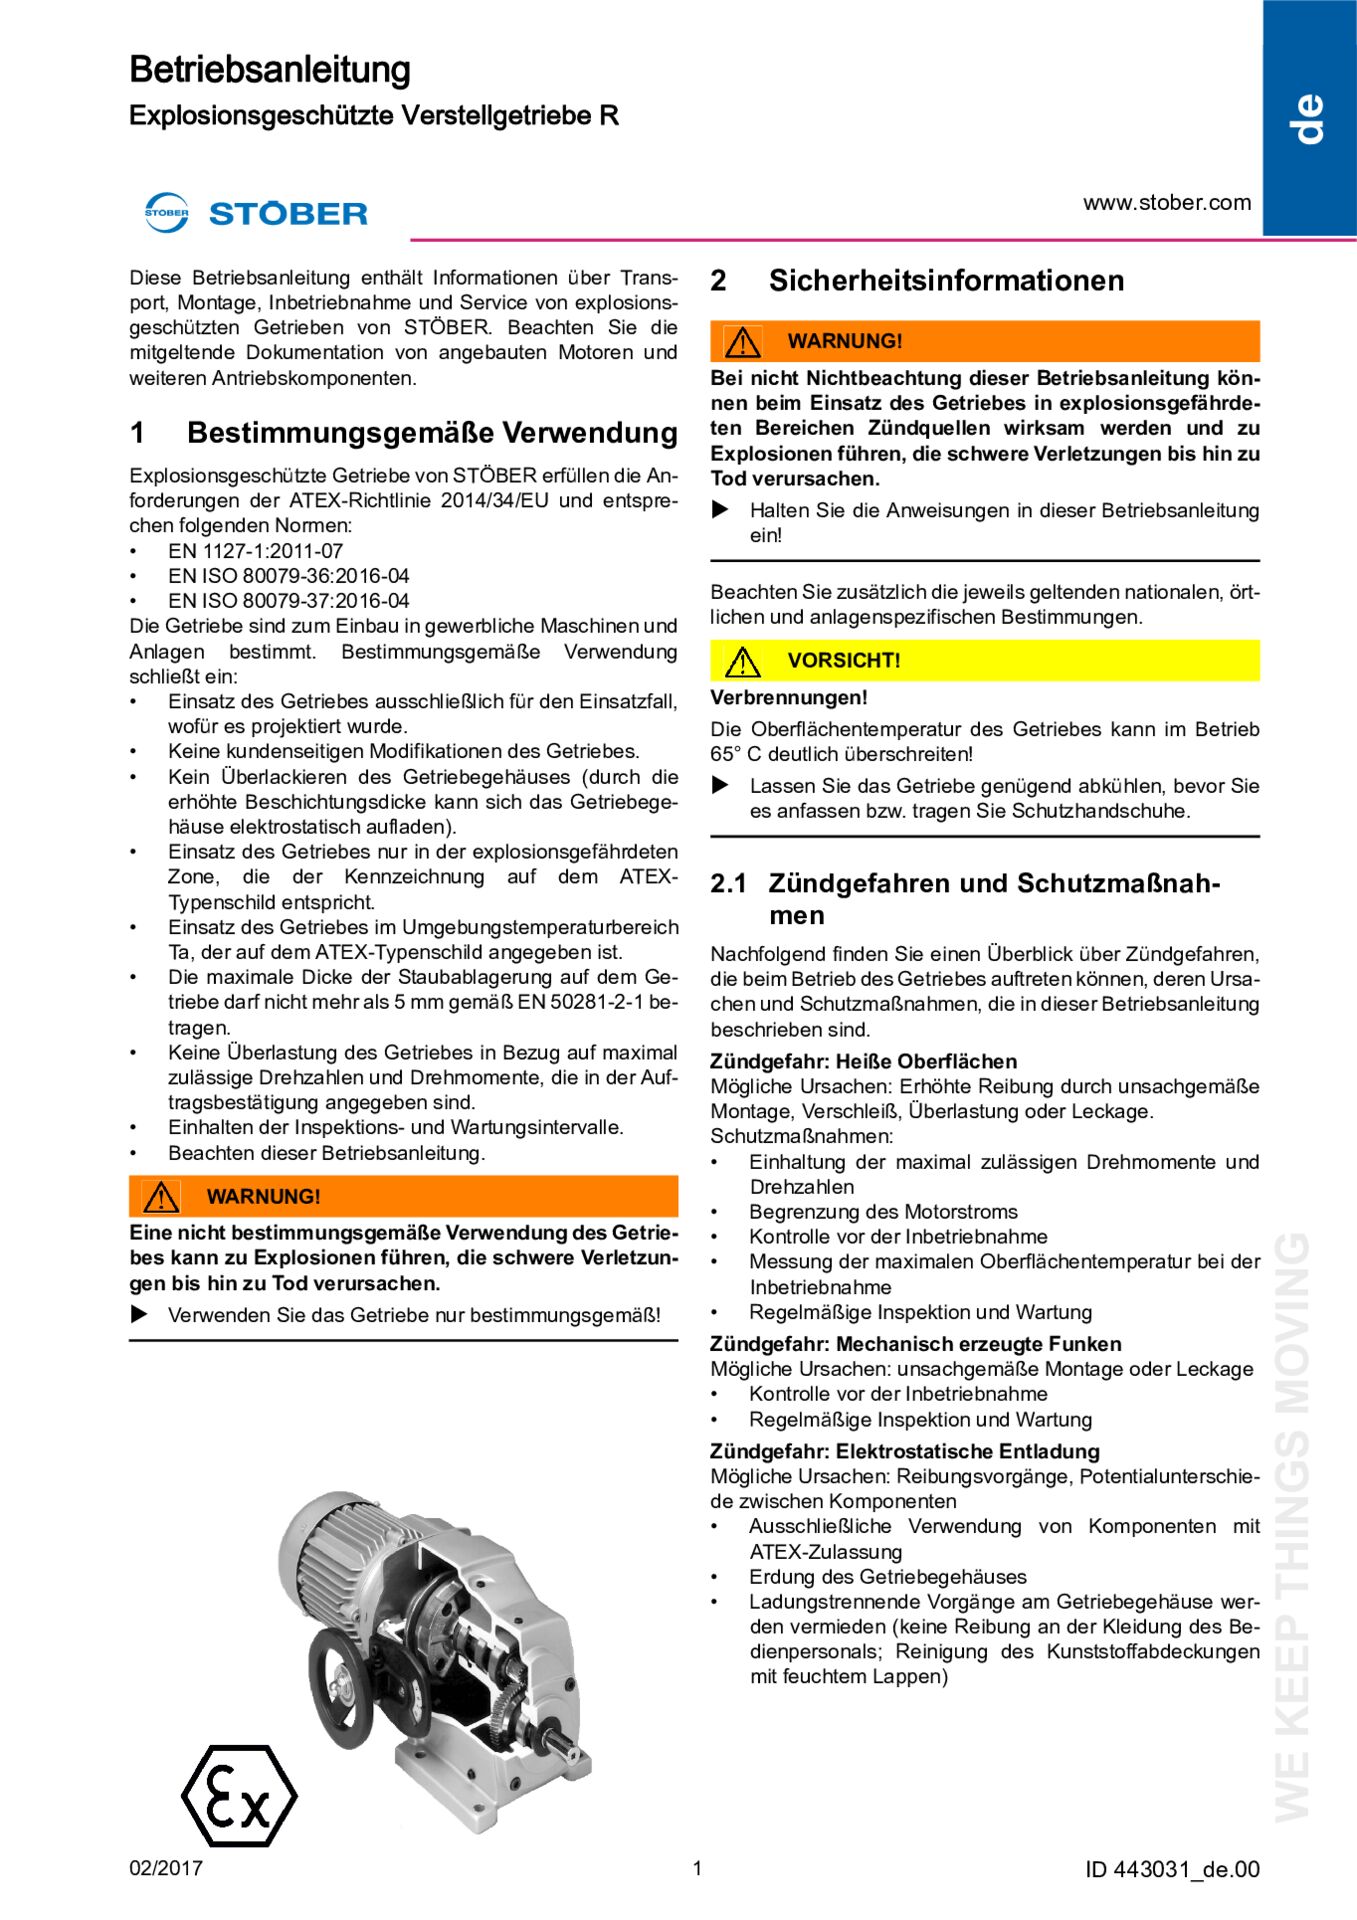 Instructions de service Variateurs antidéflagrants (ATEX) RD11